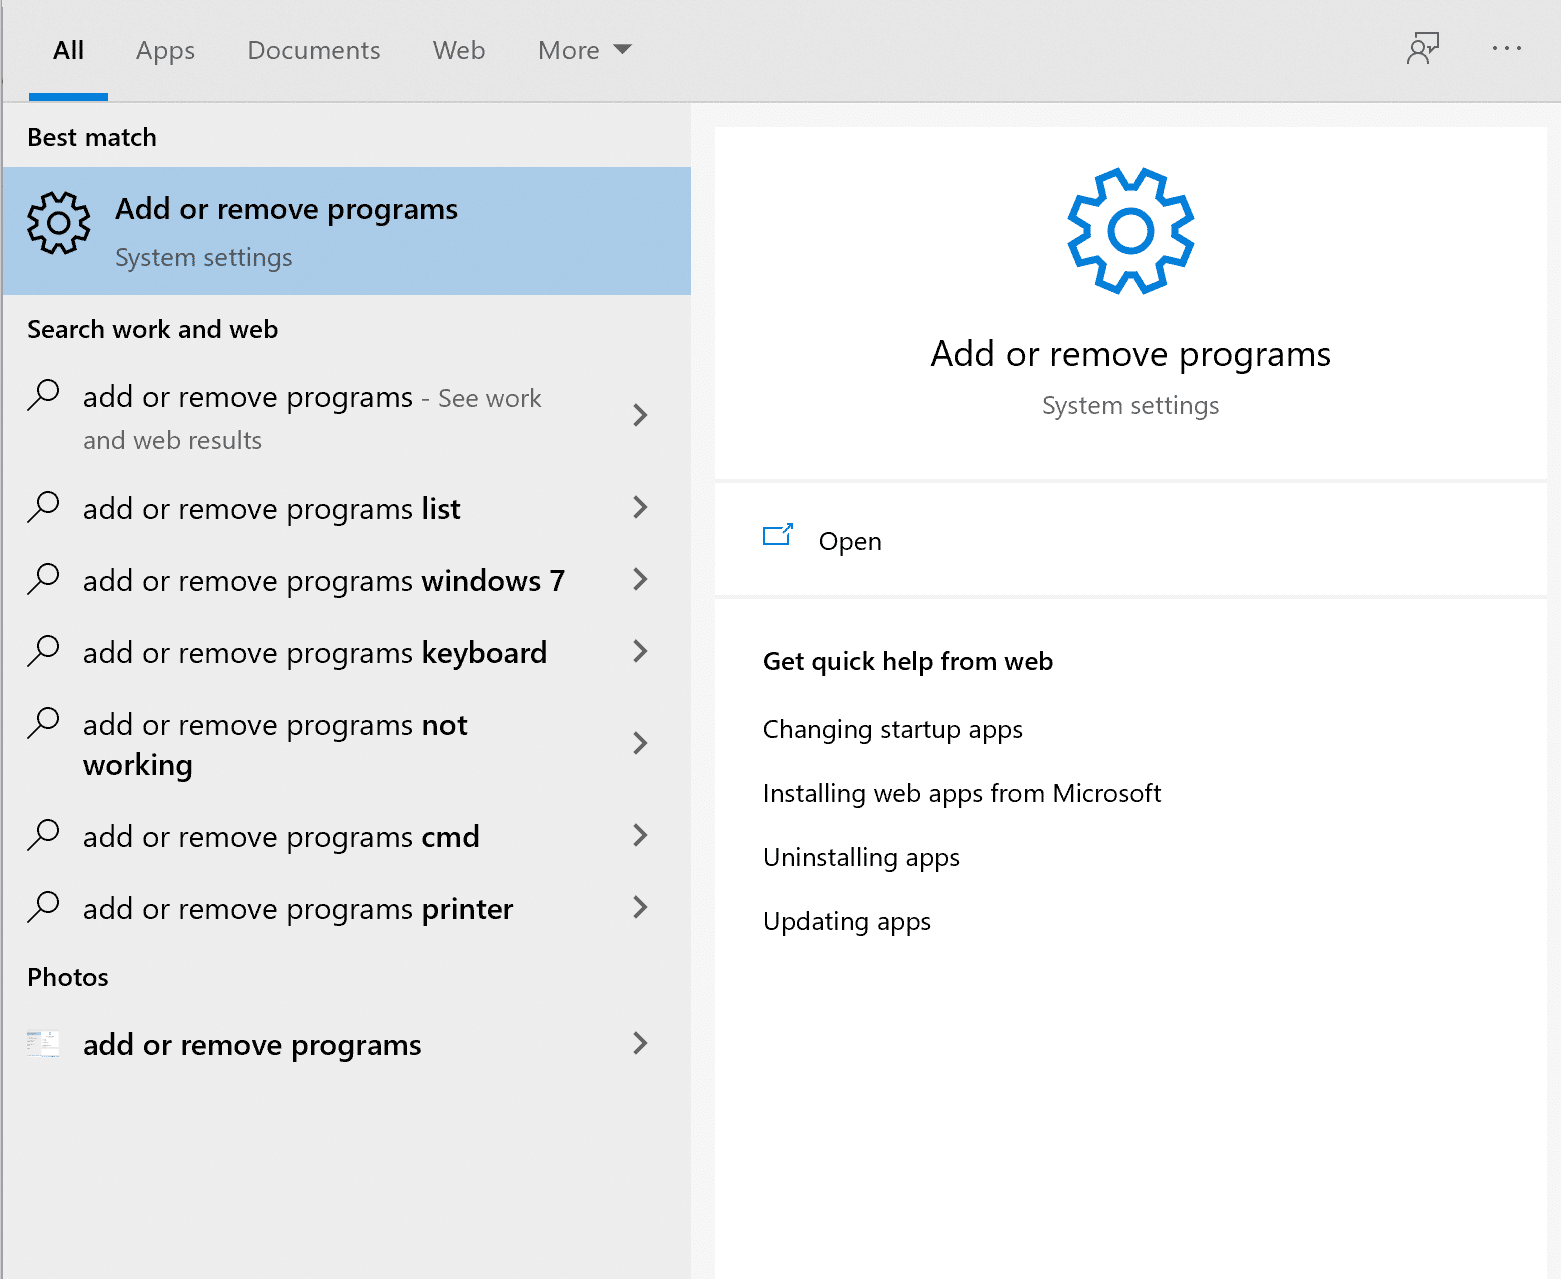 In the Windows search bar, Add or remove programs